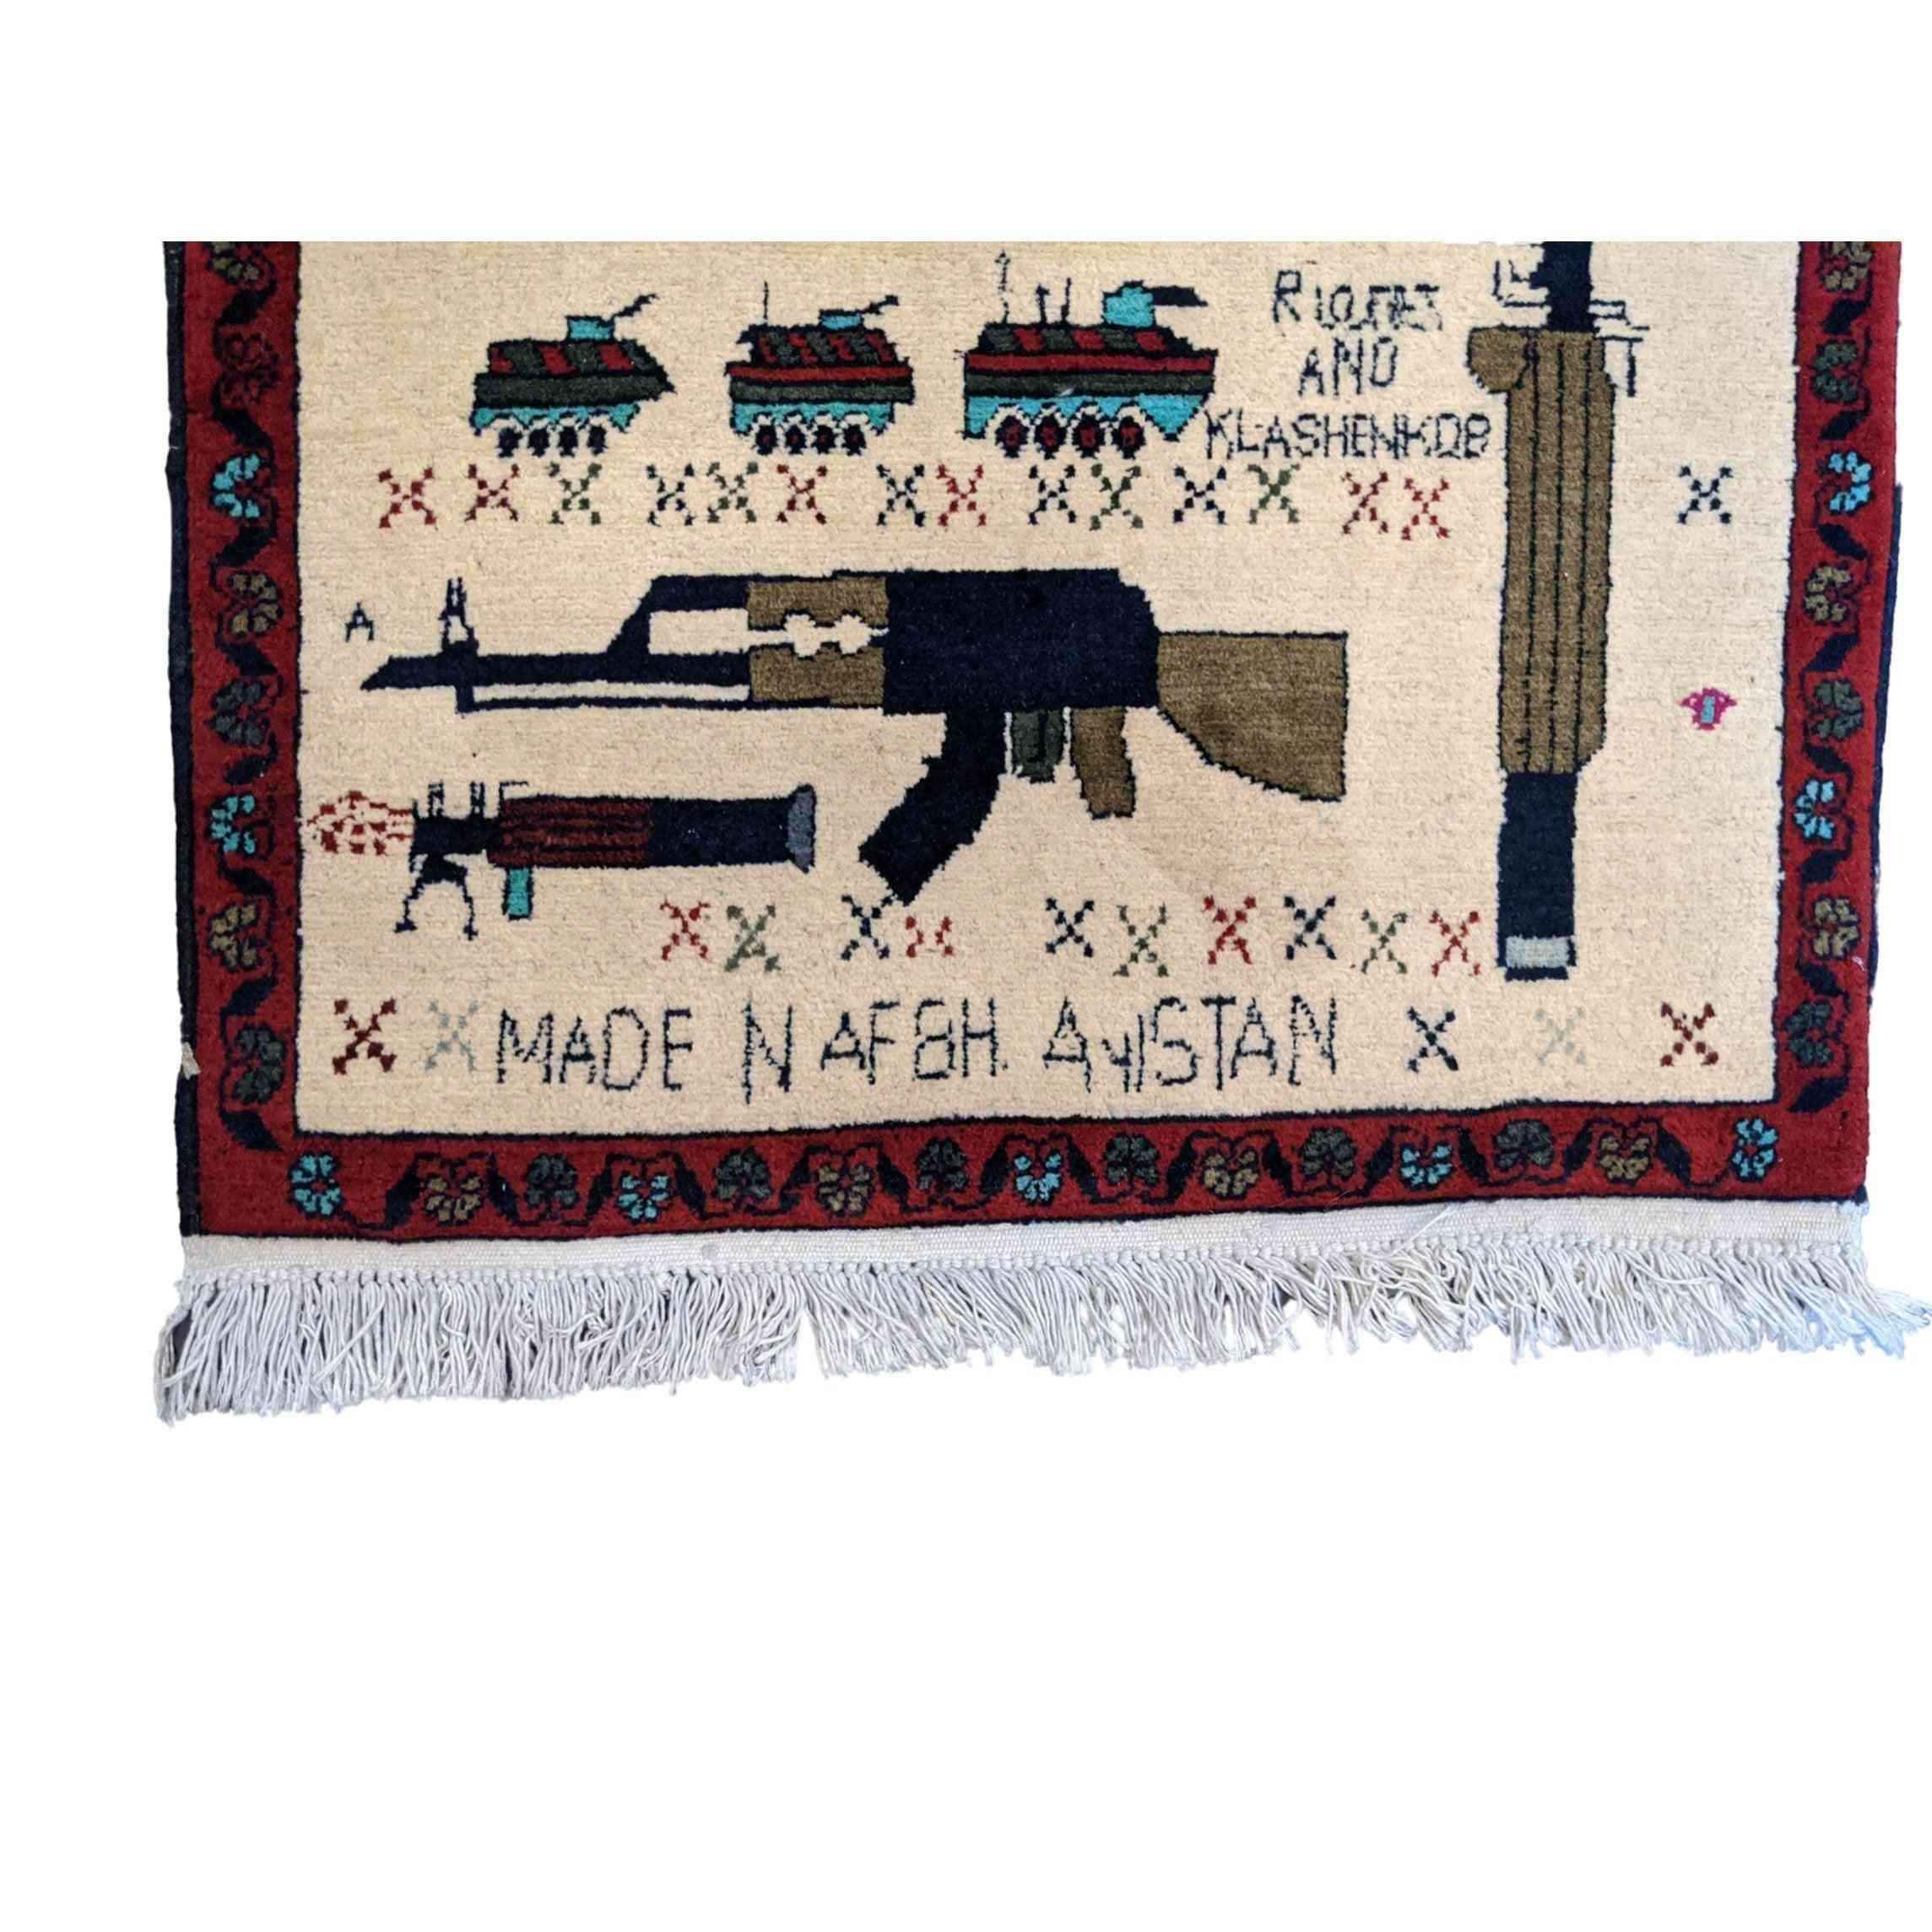 handmade in afgahnistan war rug with tanks and klashinkov